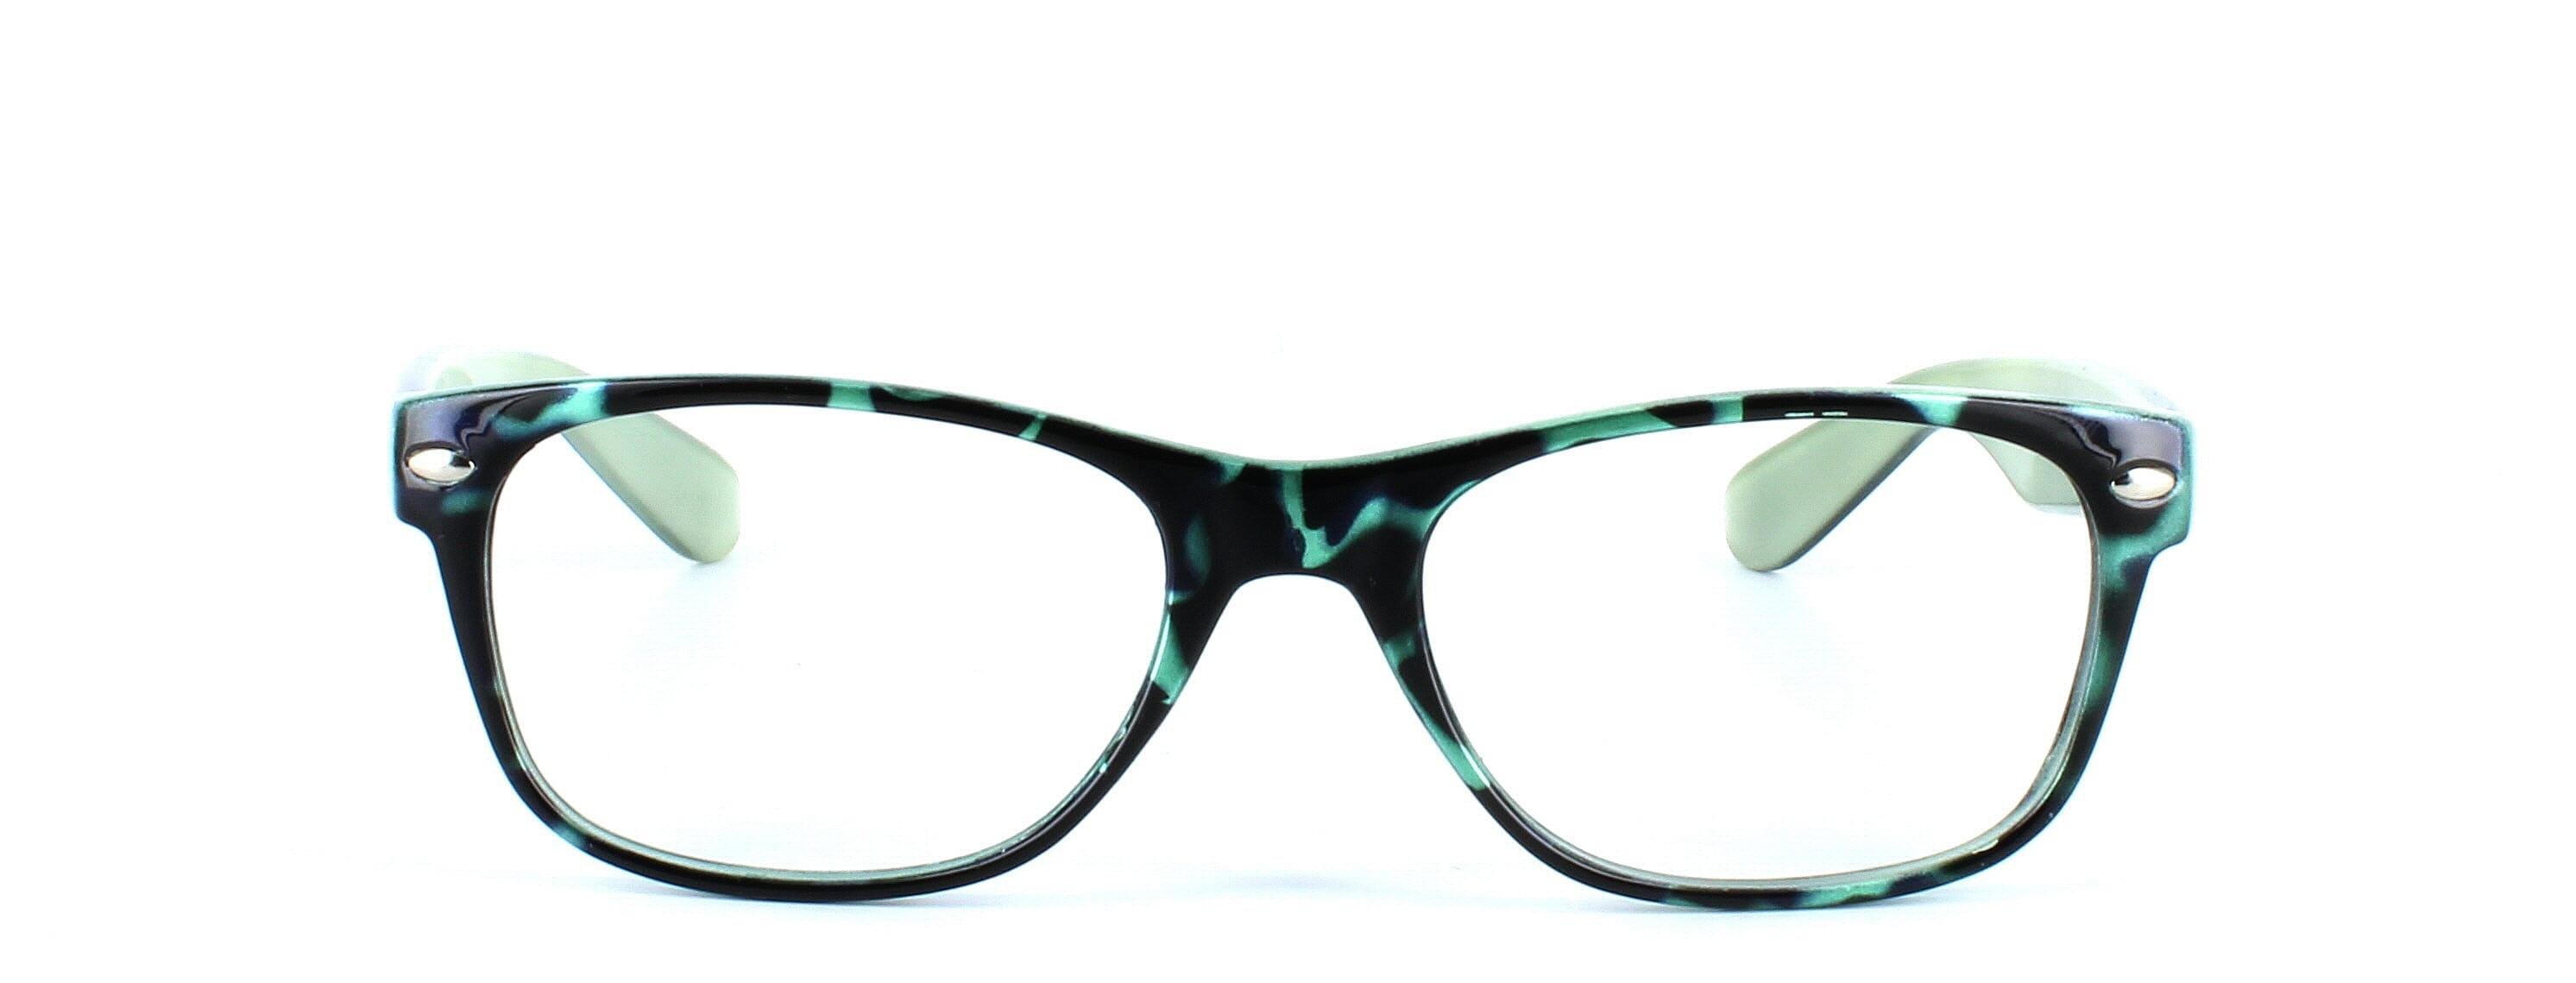 Lester - Green - Unisex acetate glasses frame - image view 2